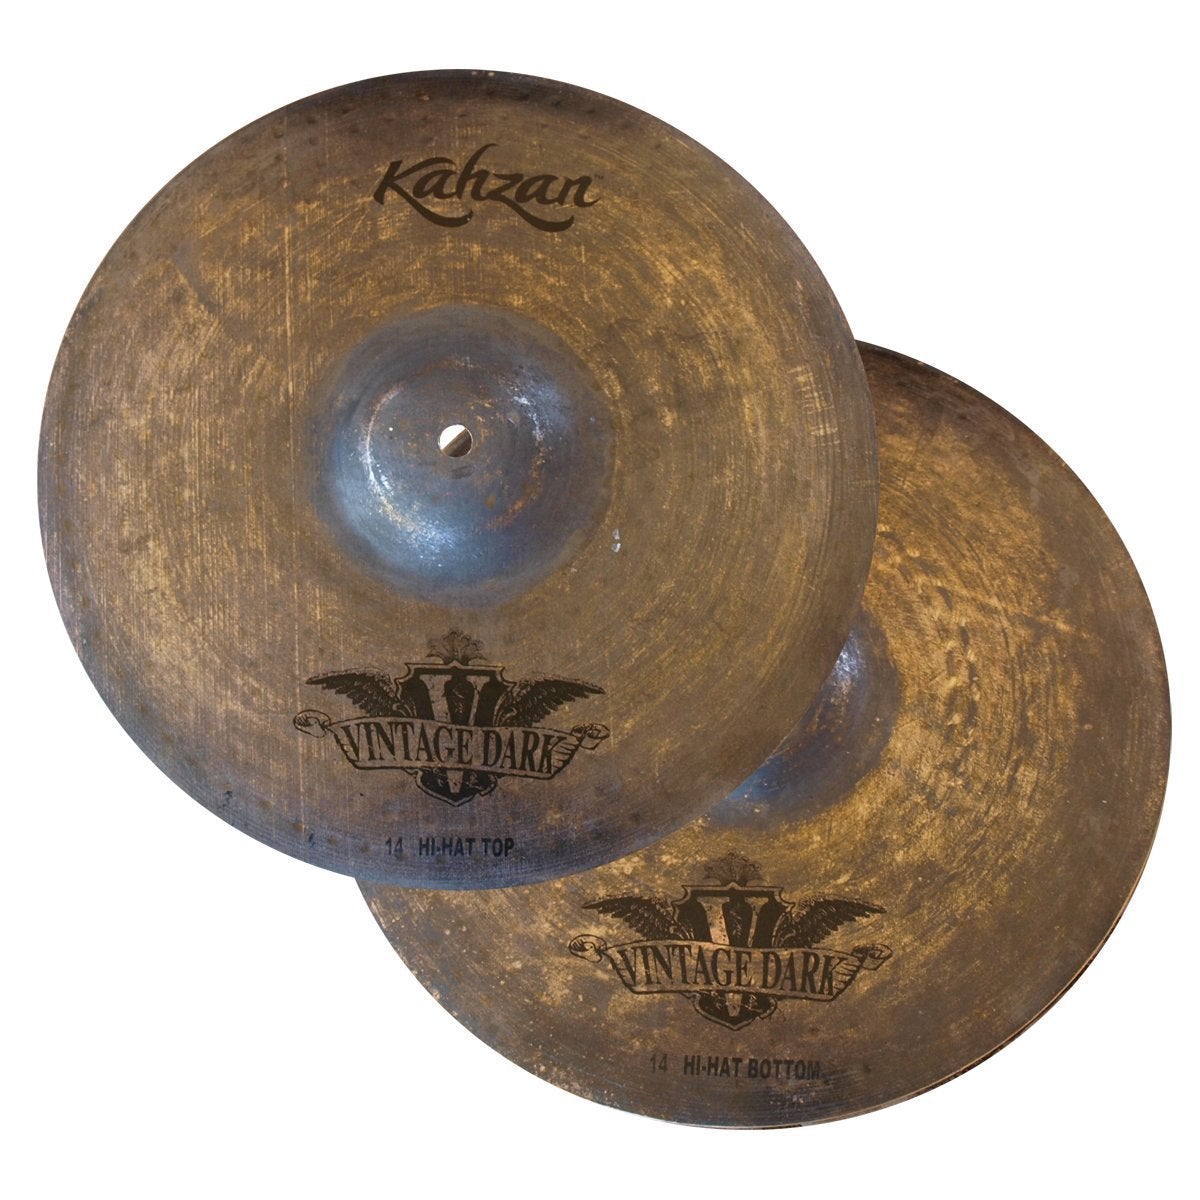 Kahzan 'Vintage Dark Series' Hi-Hat Cymbals (14")